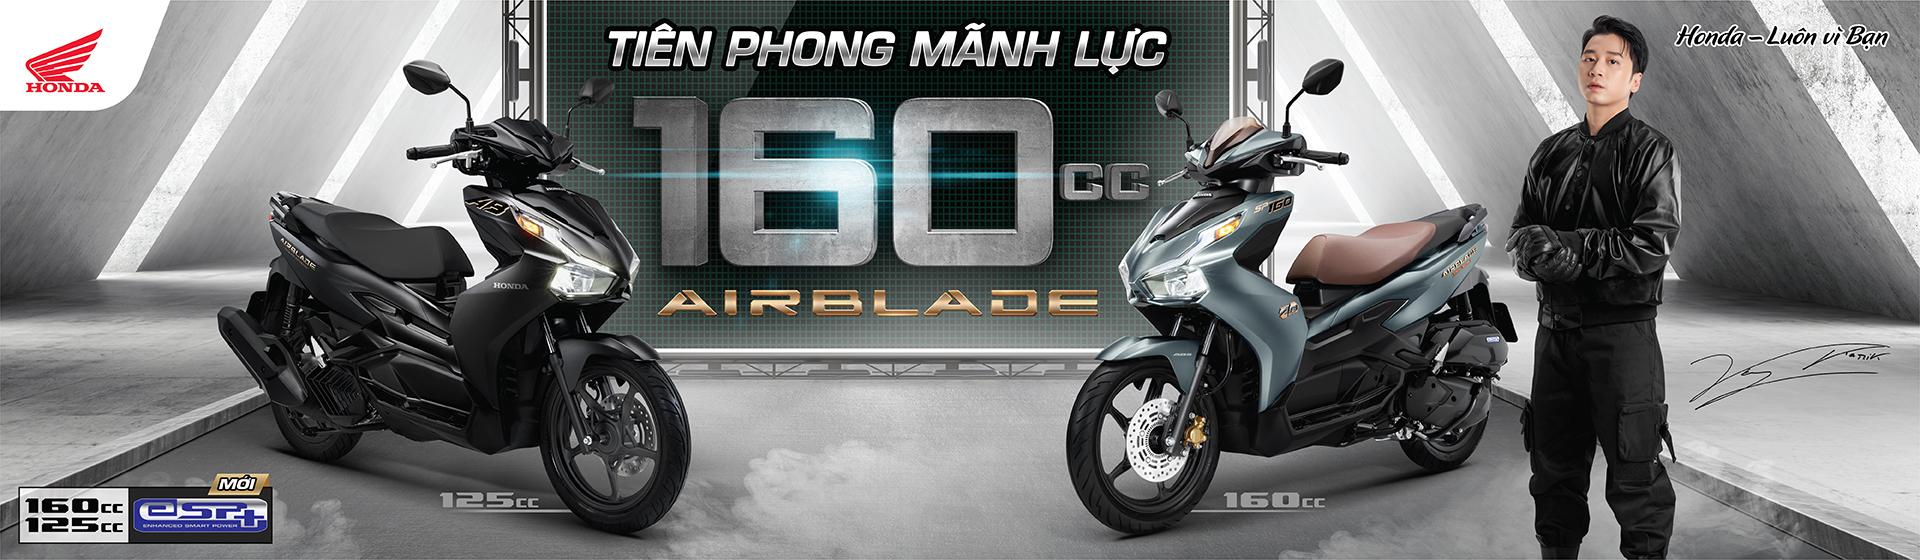 Super deal- installment support Honda Airblade motorcycle